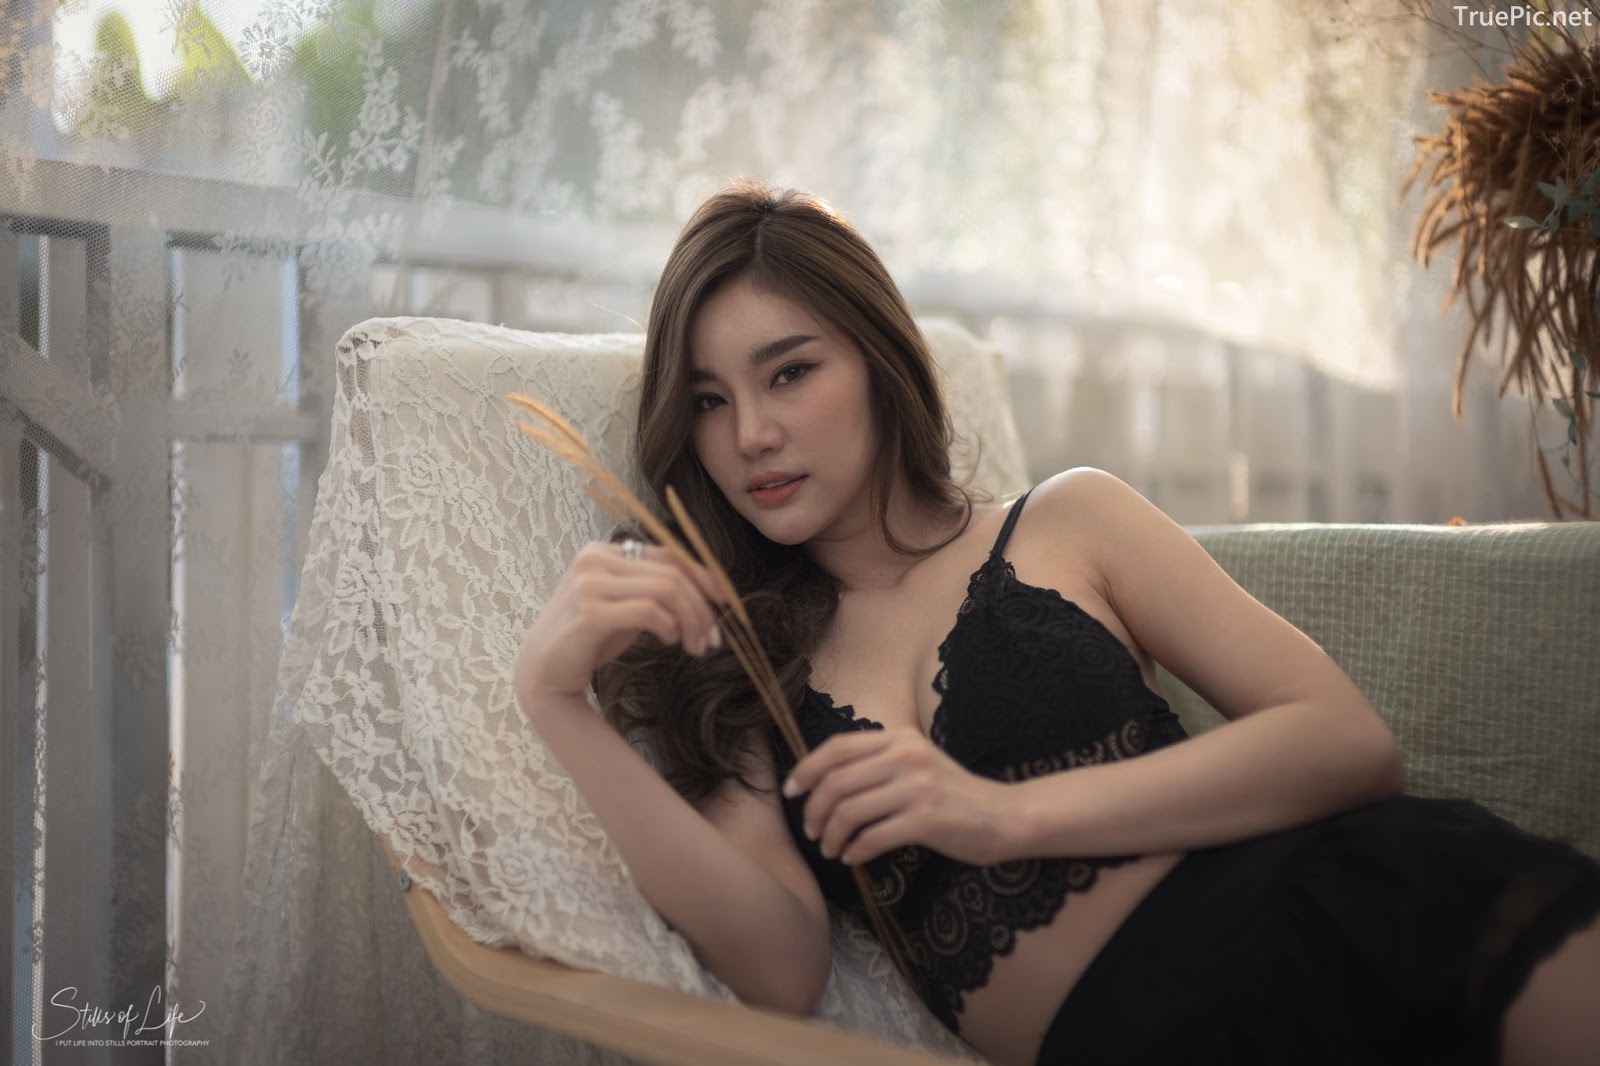 Thailand model - Jarunan Tavepanya - Charming black rose for Valentine day